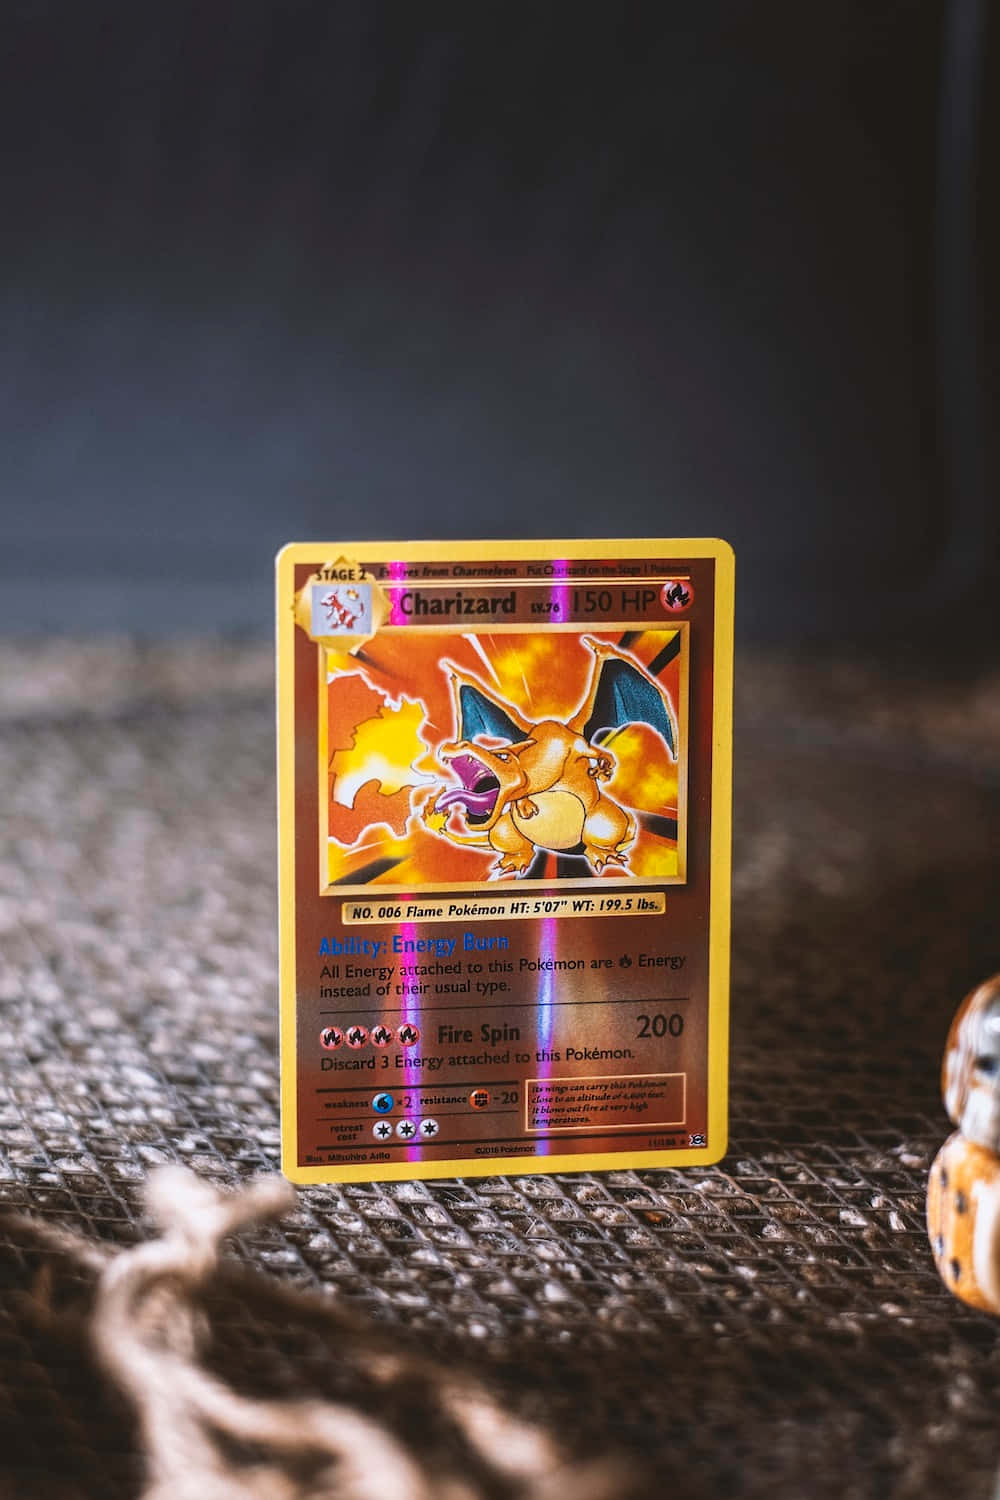 Vibrant Display of Pokemon Trading Cards